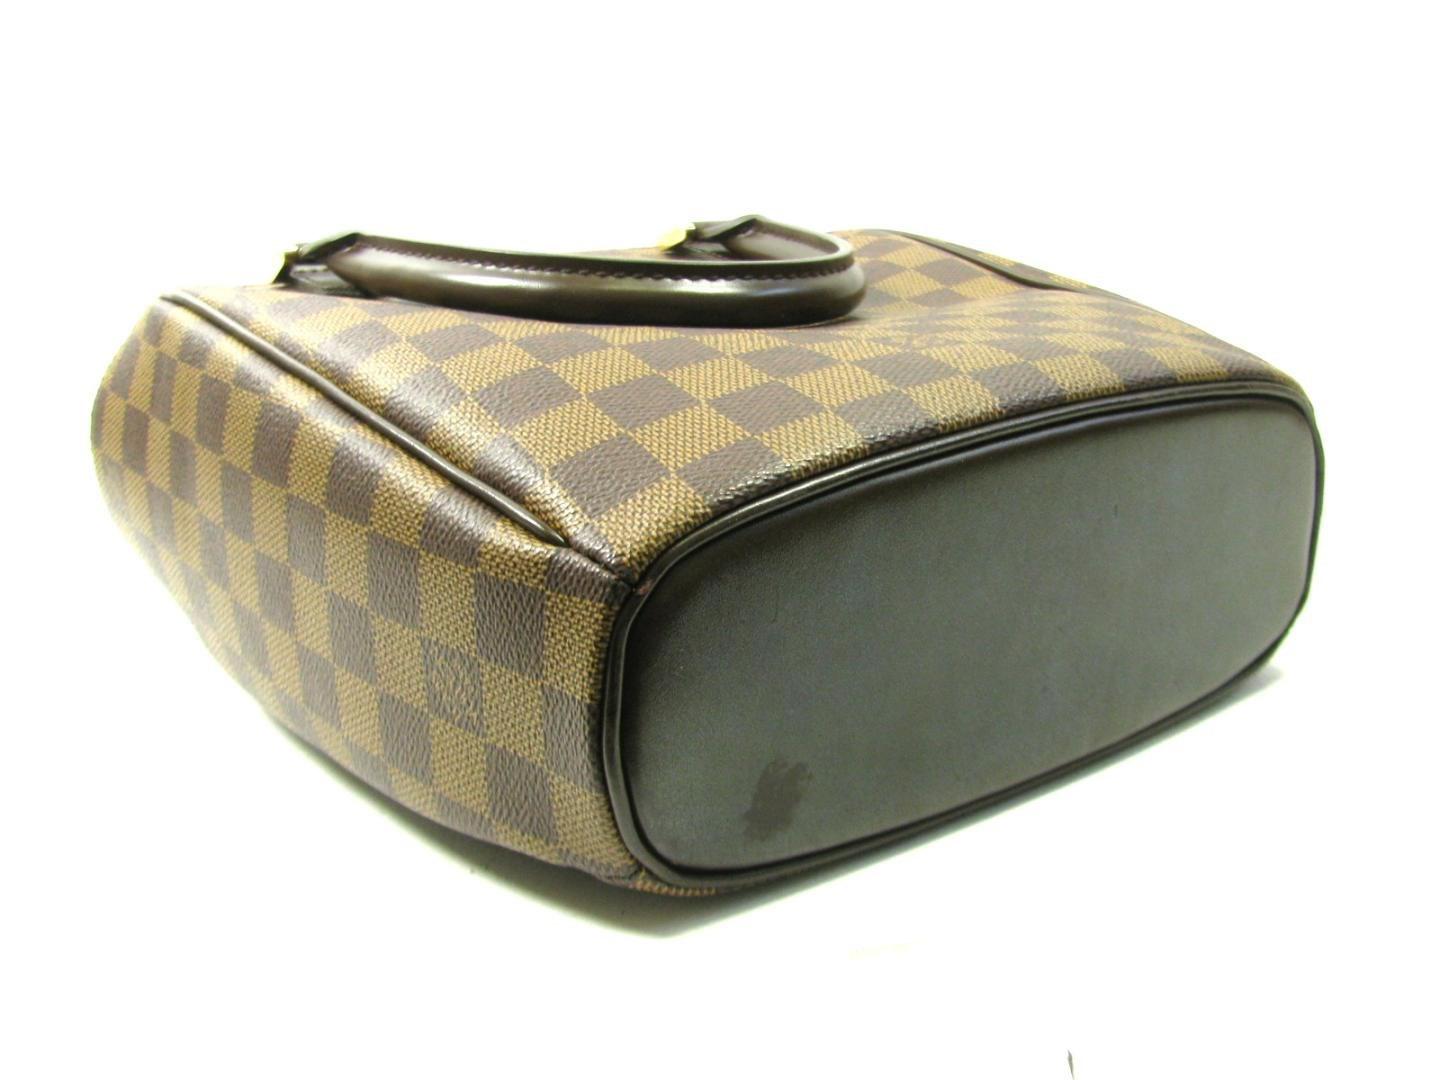 Lyst - Louis Vuitton Sarria Saw Hand Tote Bag N51284 Damier Canvas Ebene Used Vintage in Brown